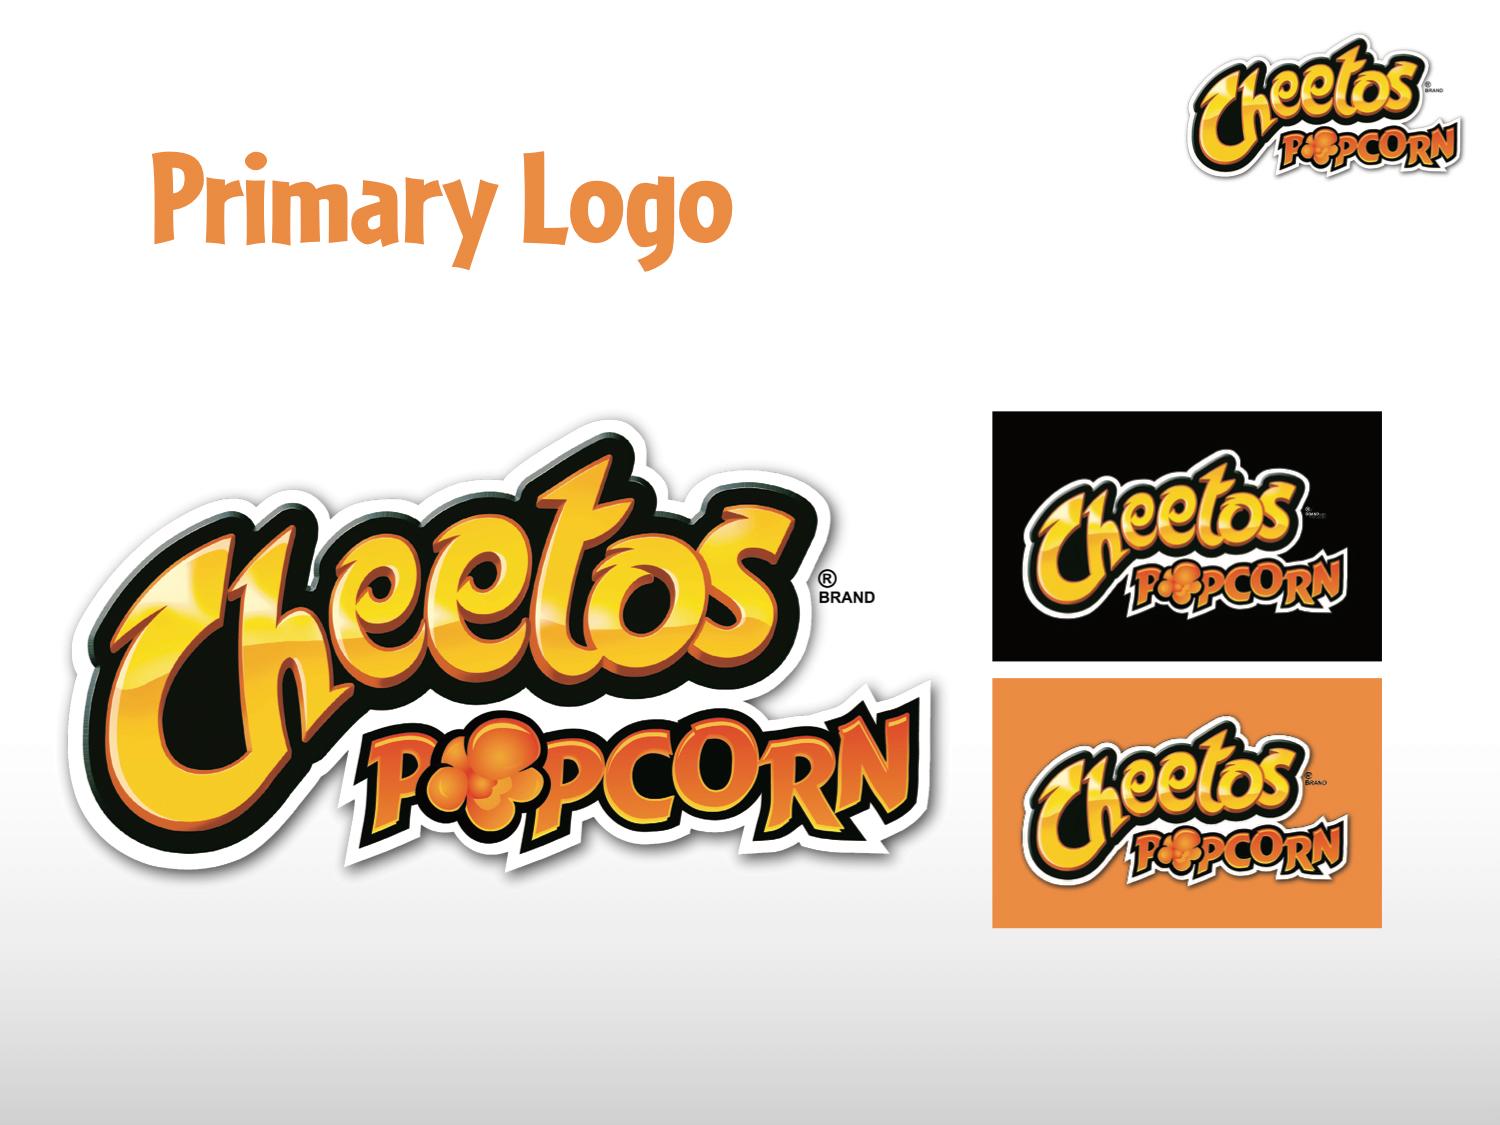 Cheetos Logo - CHEETOS POPCORN LOGO & STYLE GUIDE on Behance